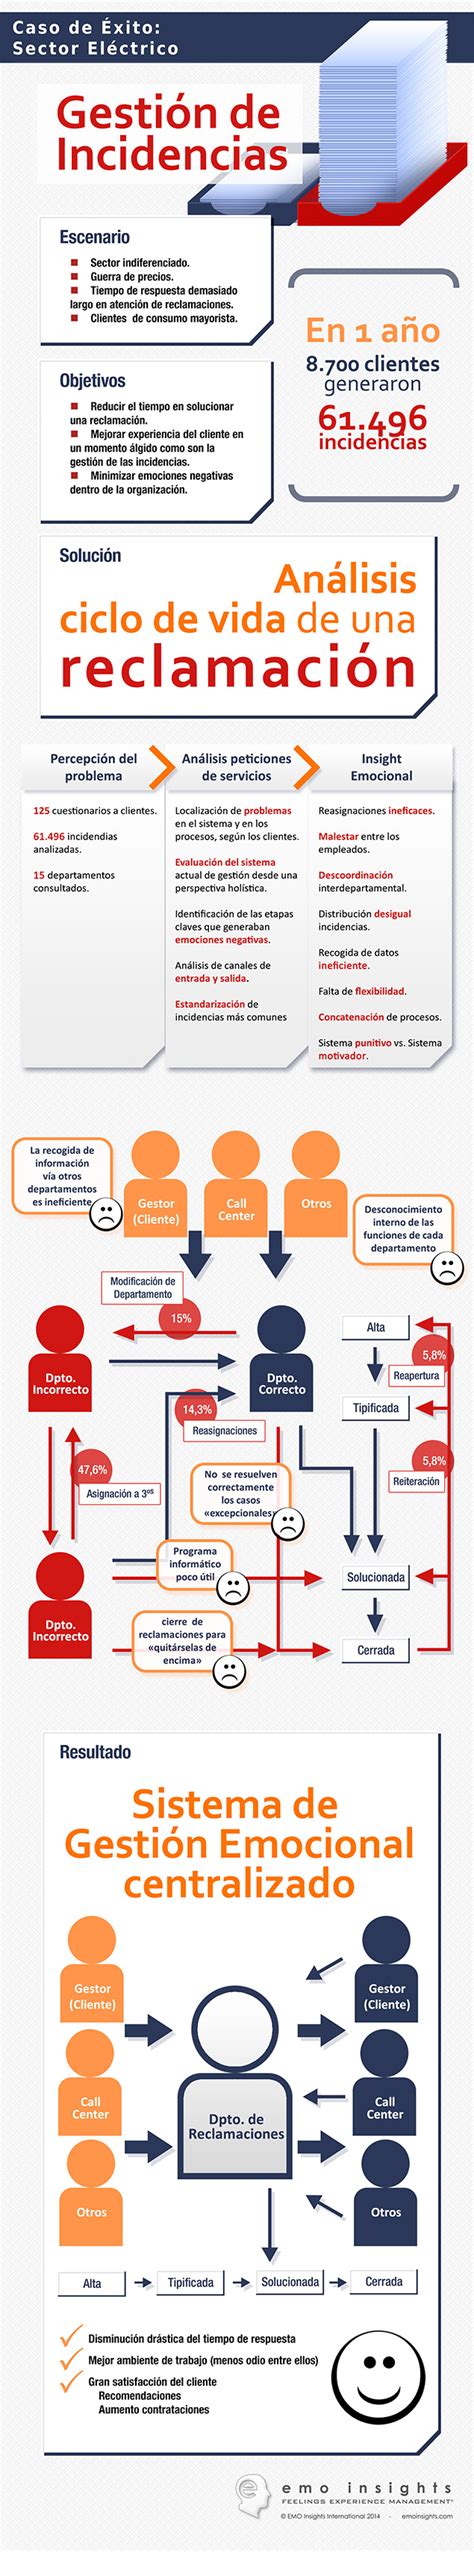 Gestión De Incidencias Caso De éxito Infografia Infographic